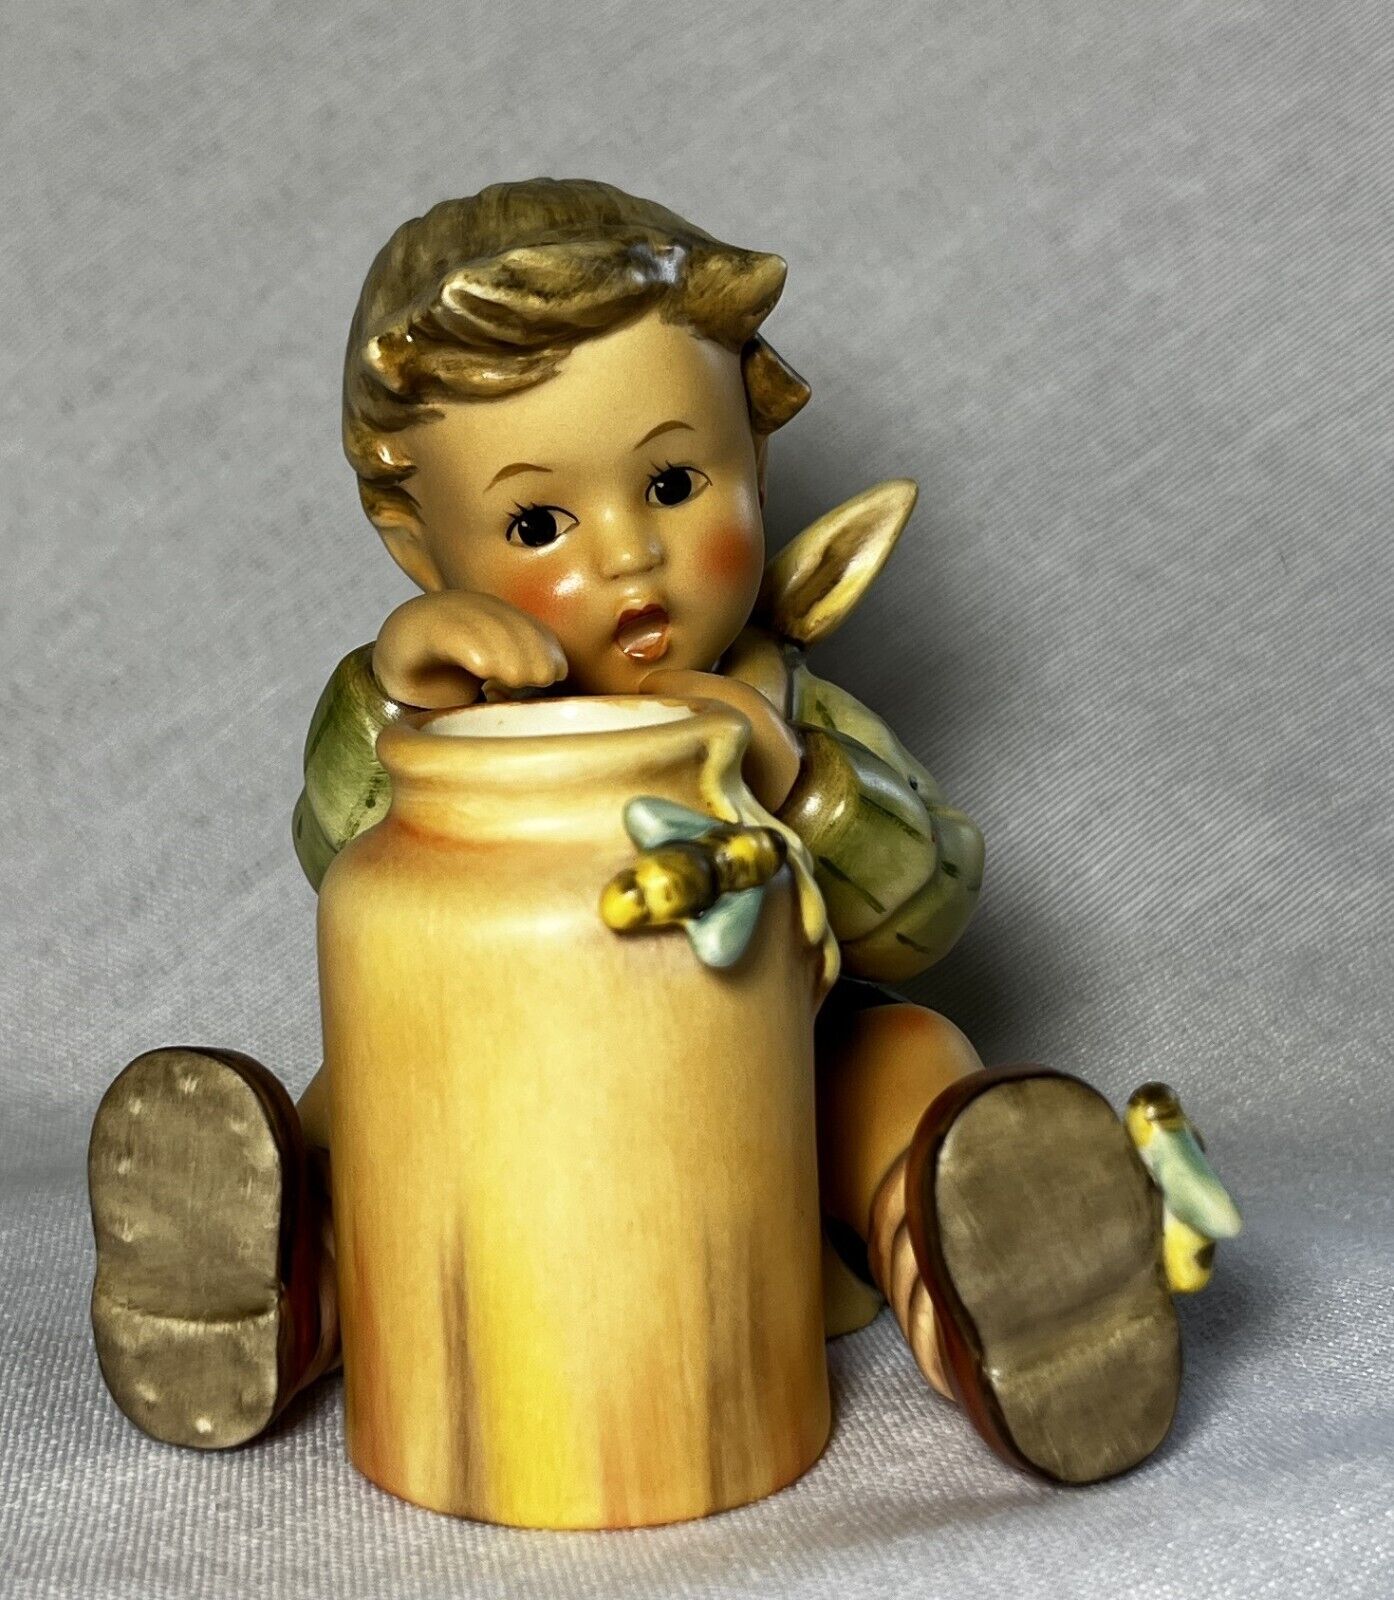 Hummel Figurine, Honey Lover - 312/I, TMK-9, 1955, Germany, 